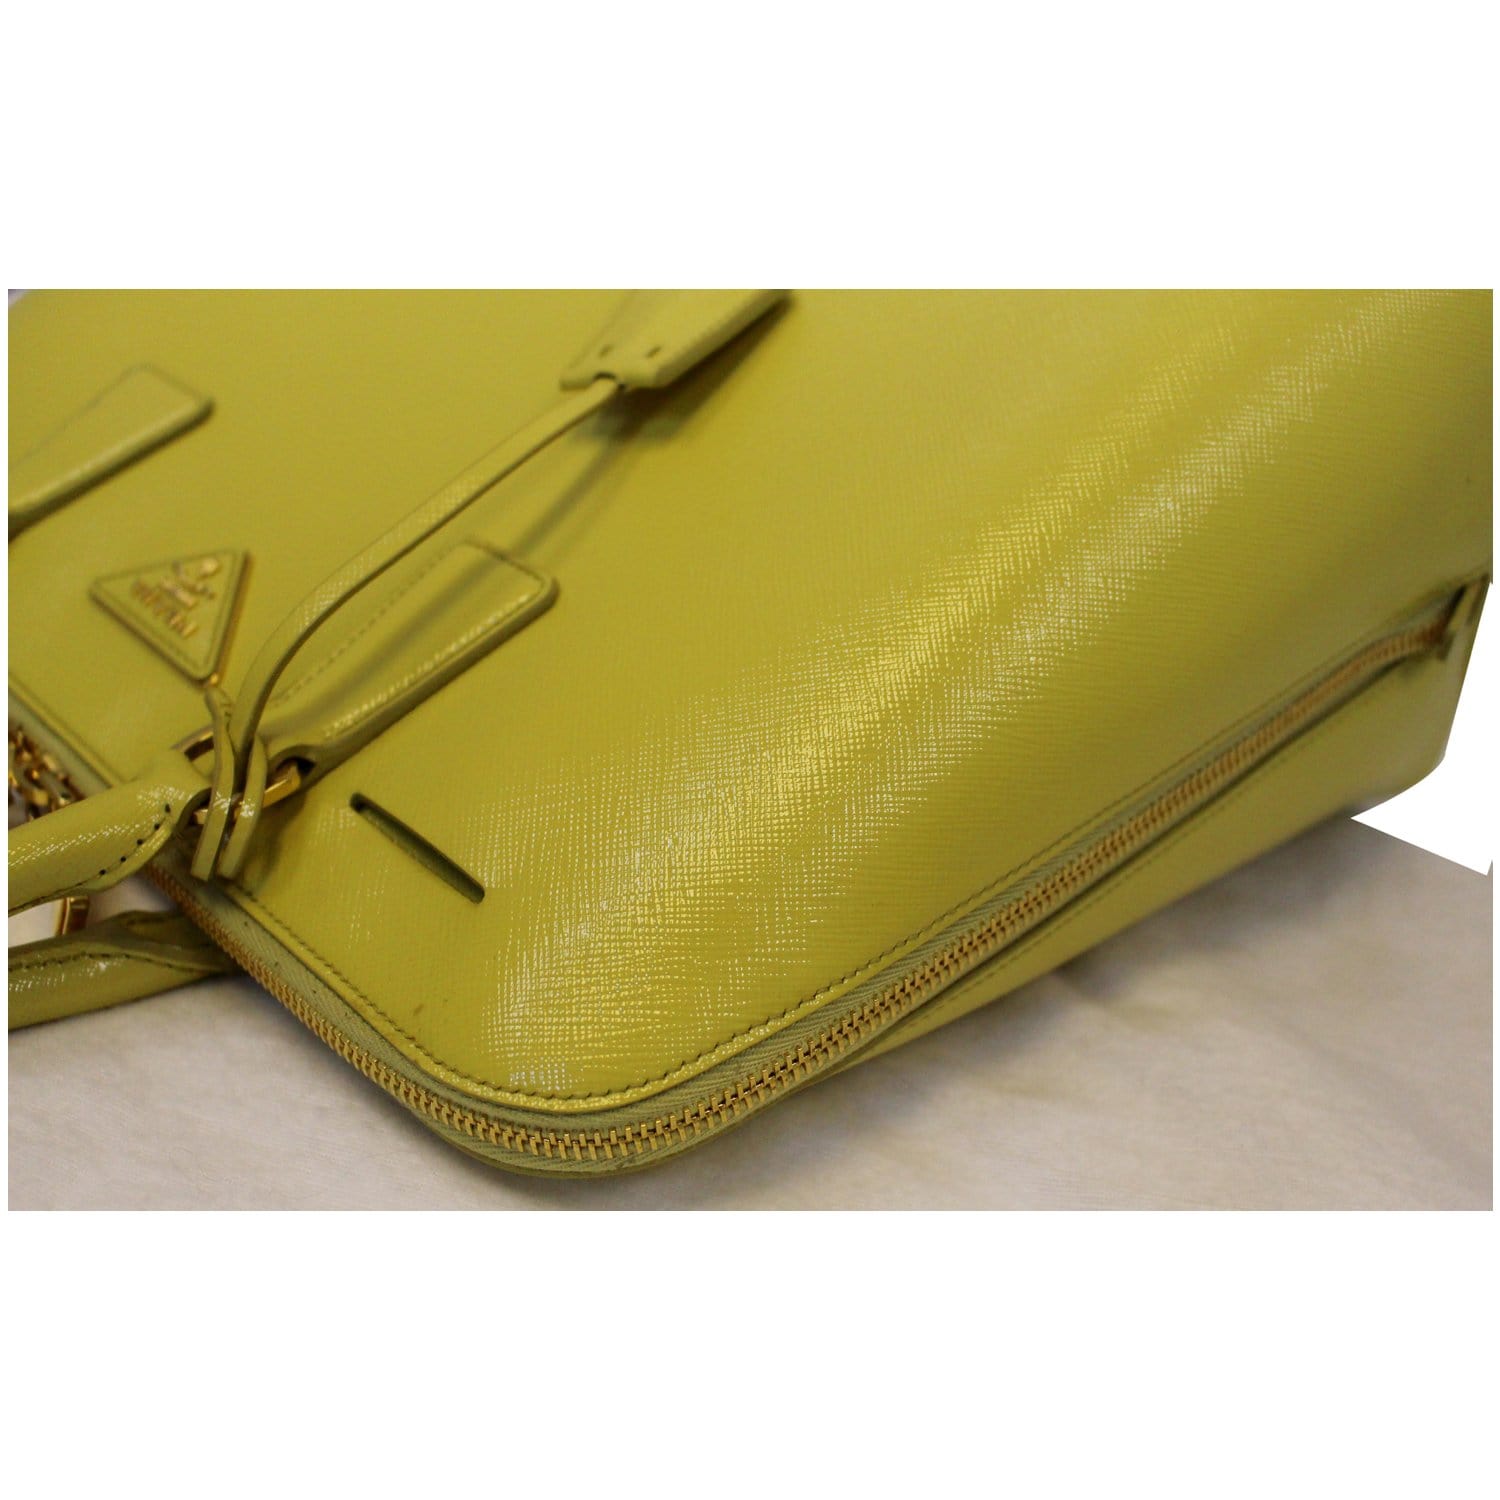 yellow prada saffiano clutch bag